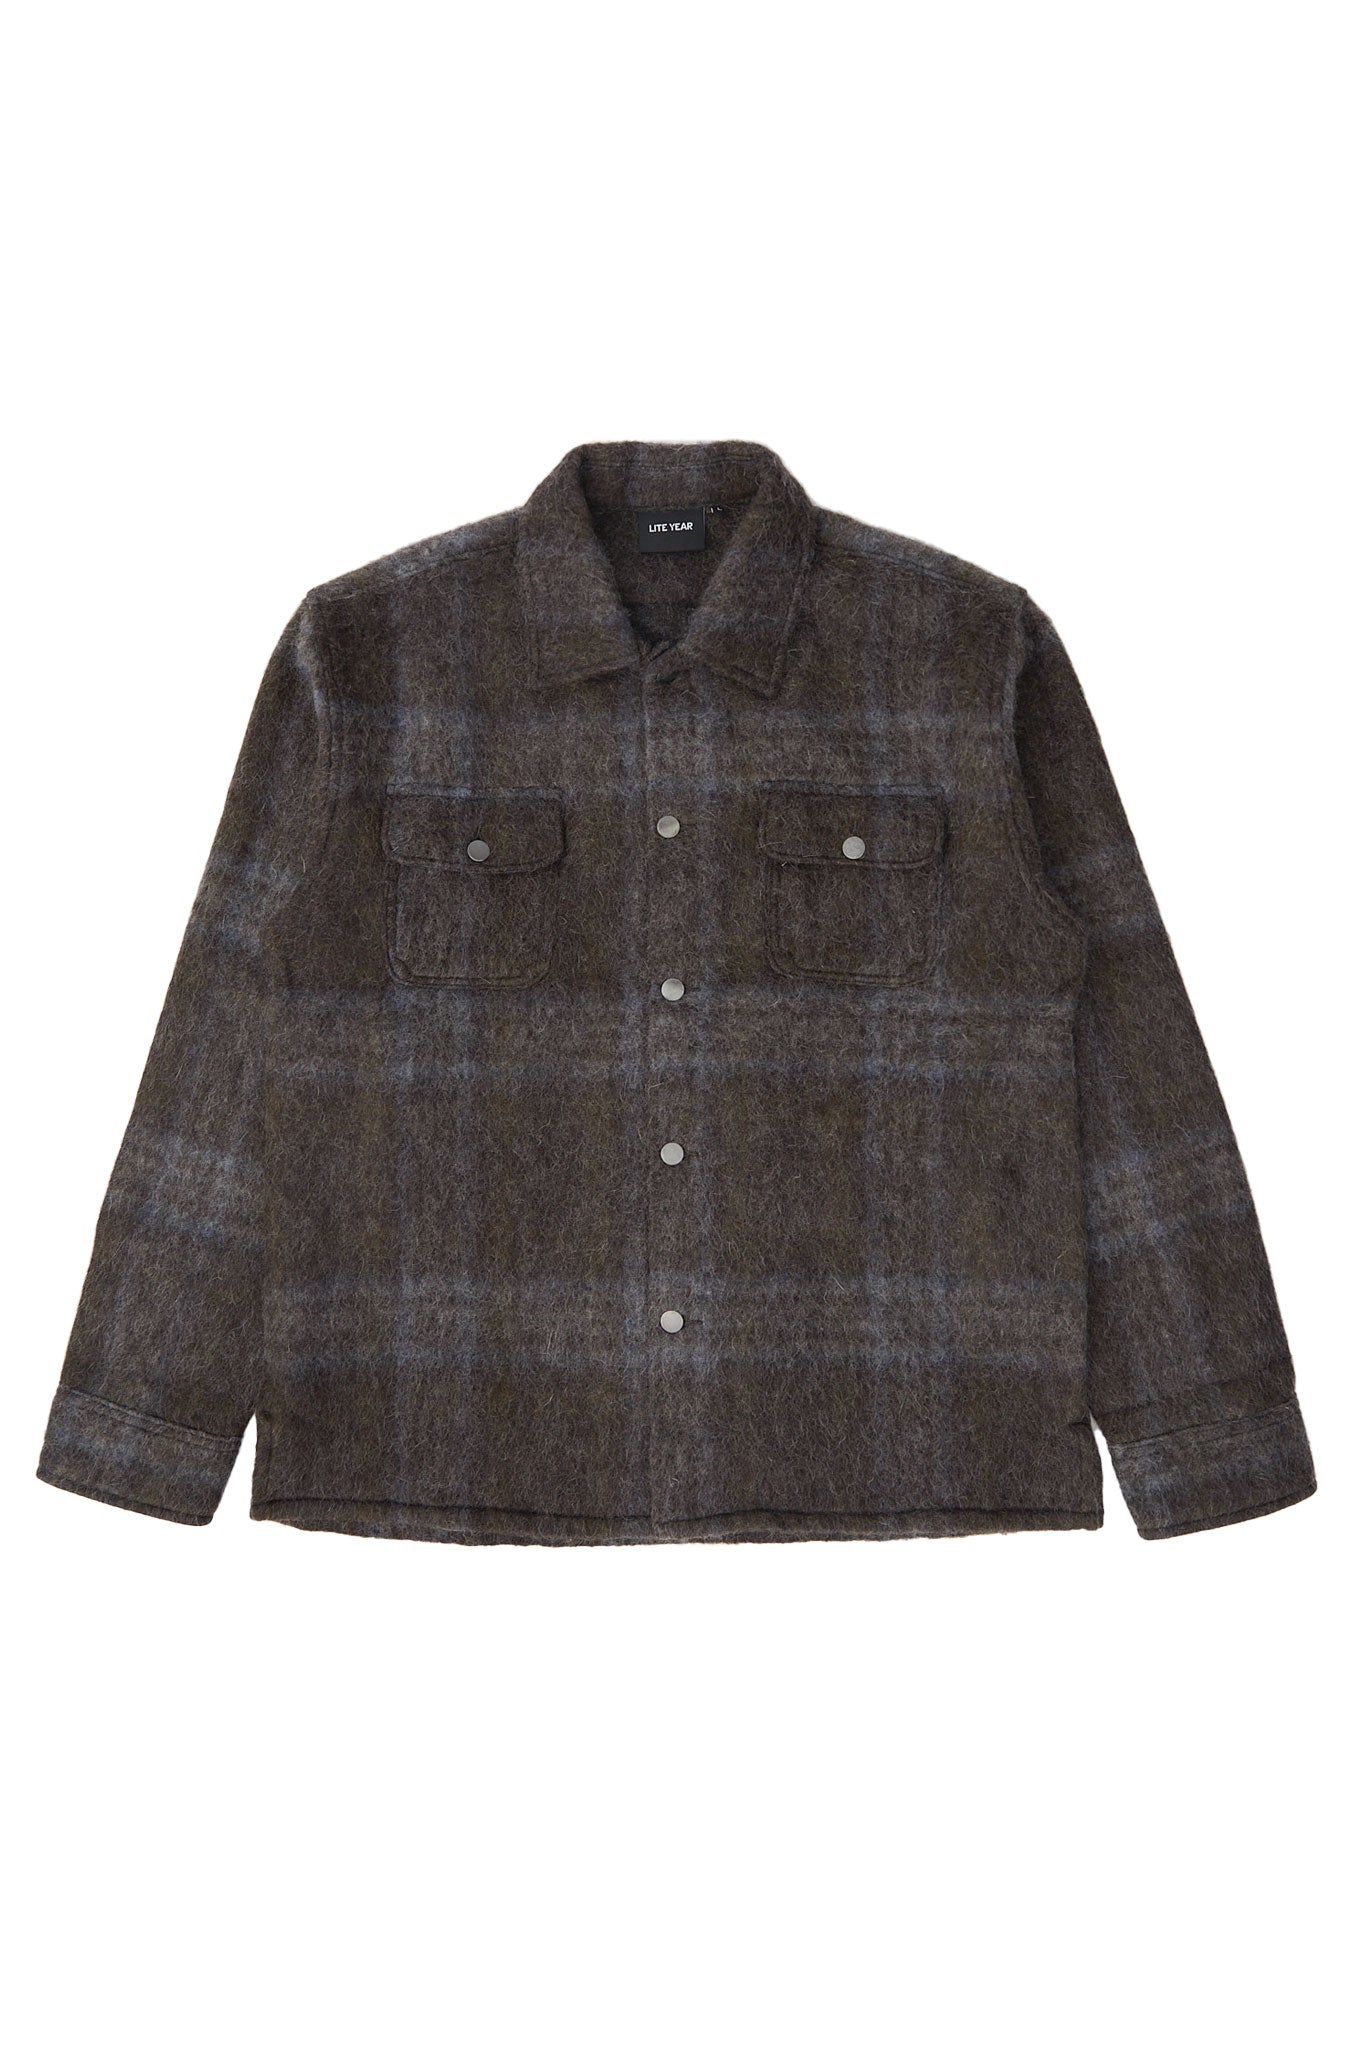 Lite Year Wool Work Jacket - Grey Check